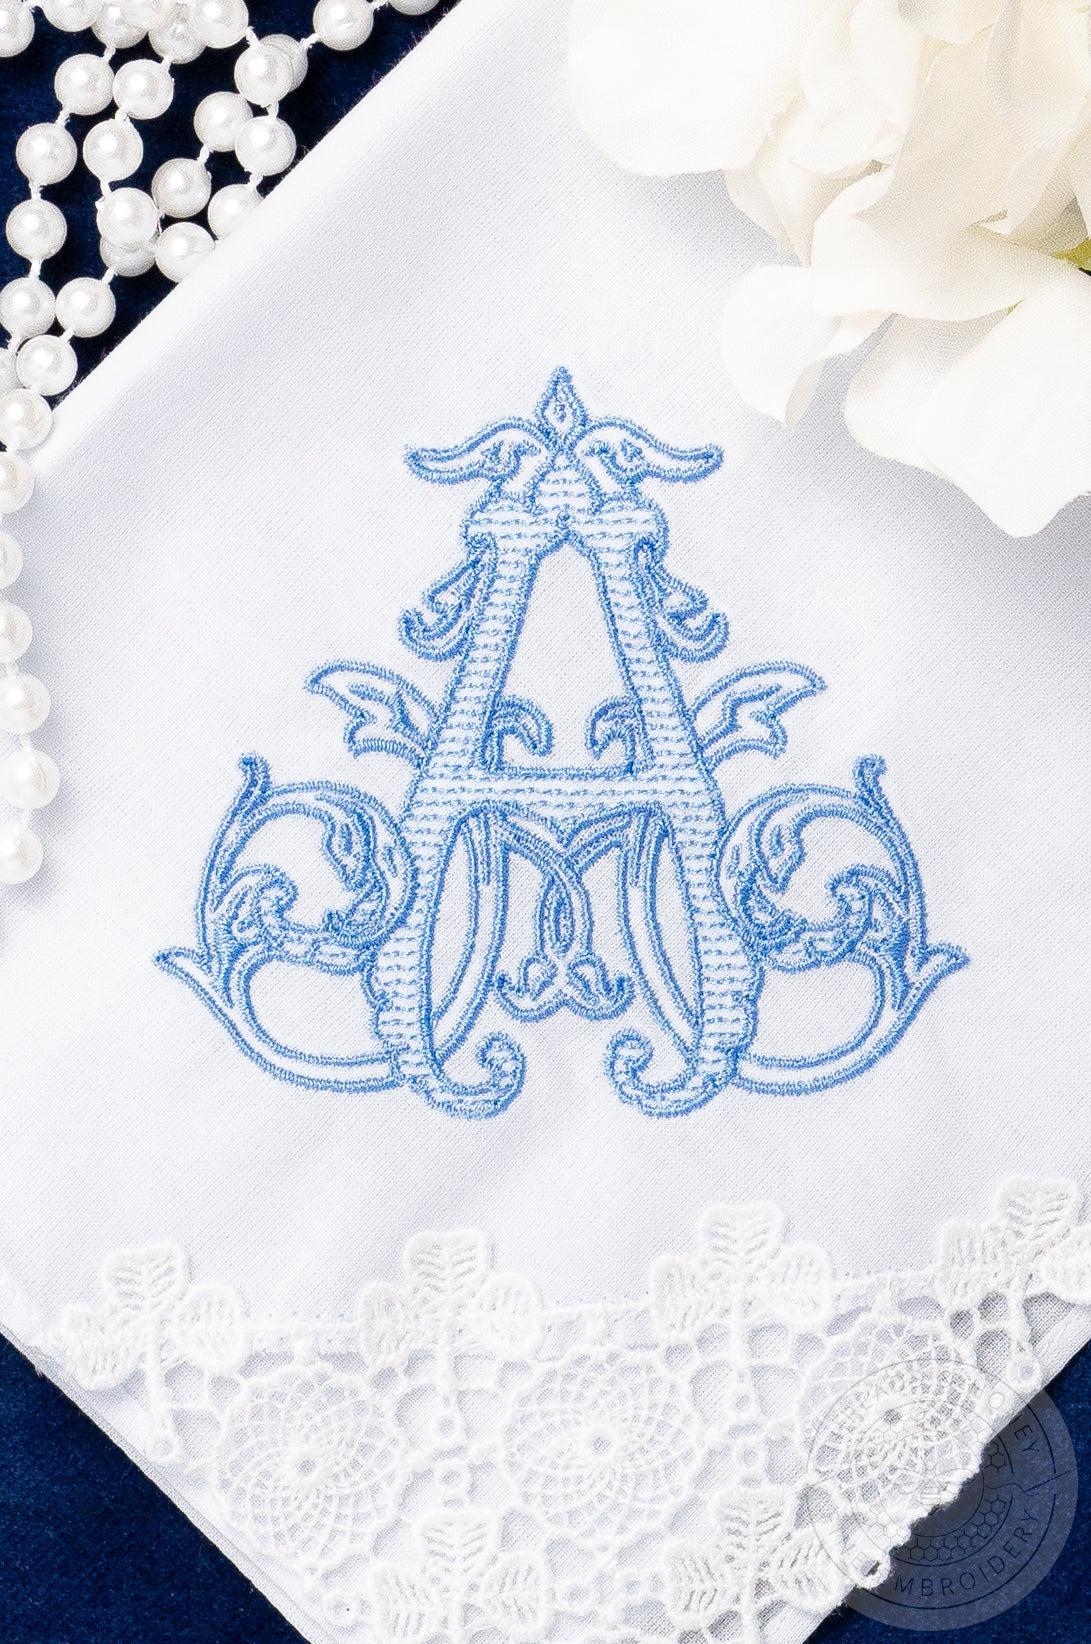 Monogrammed Women's Handkerchief, Embroidered